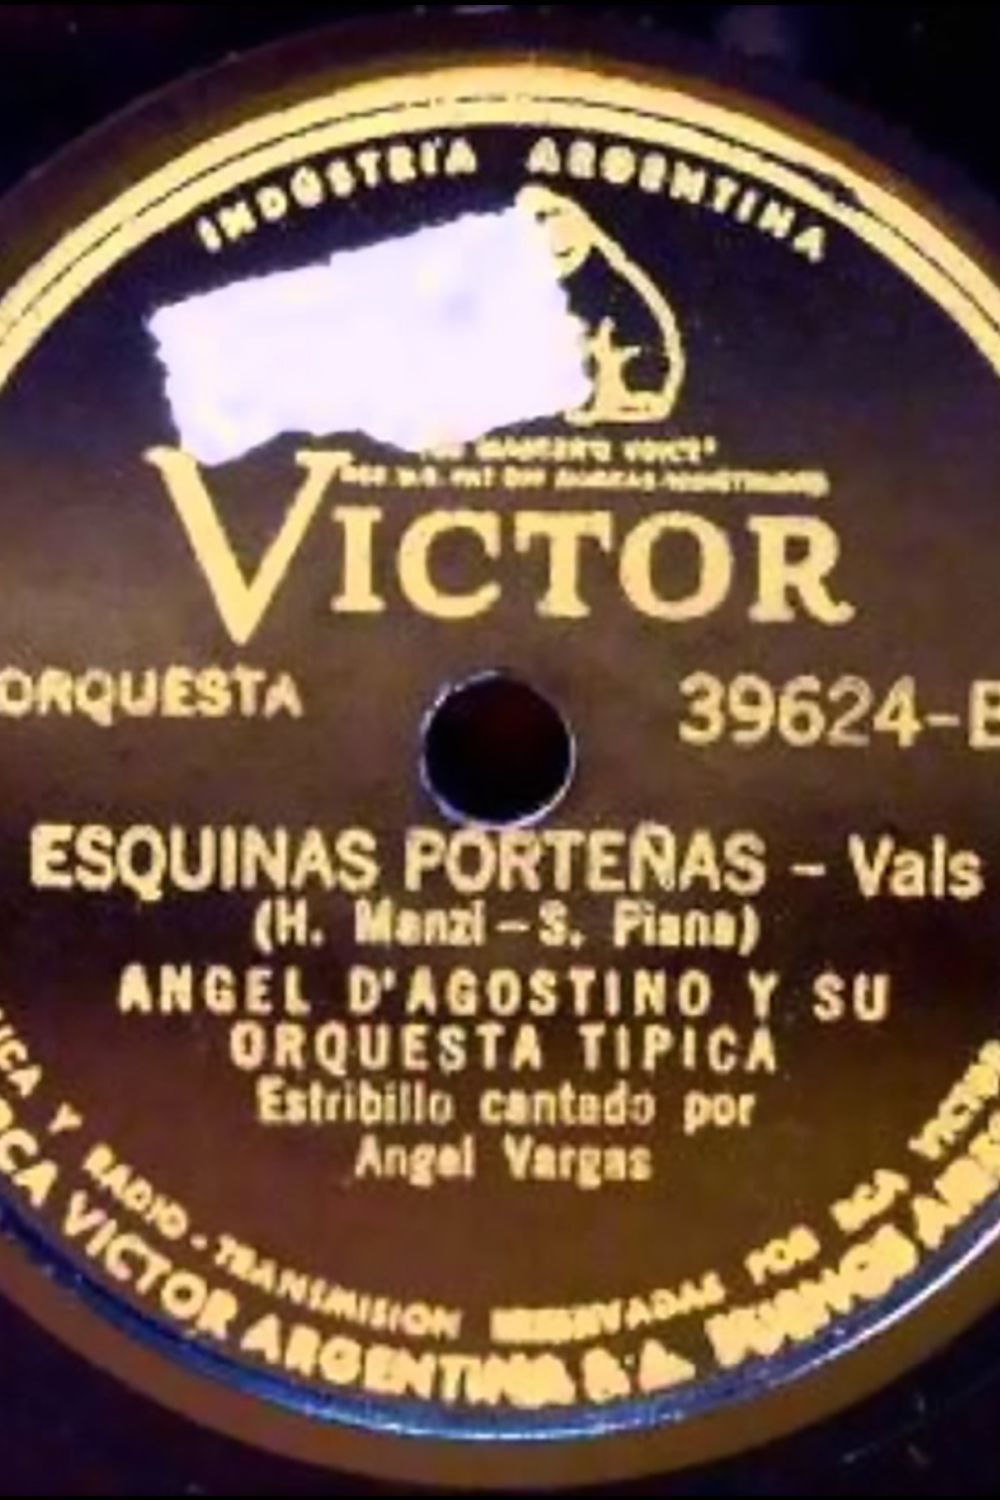 "Esquinas porteñas", Argentine Tango vinyl disco.